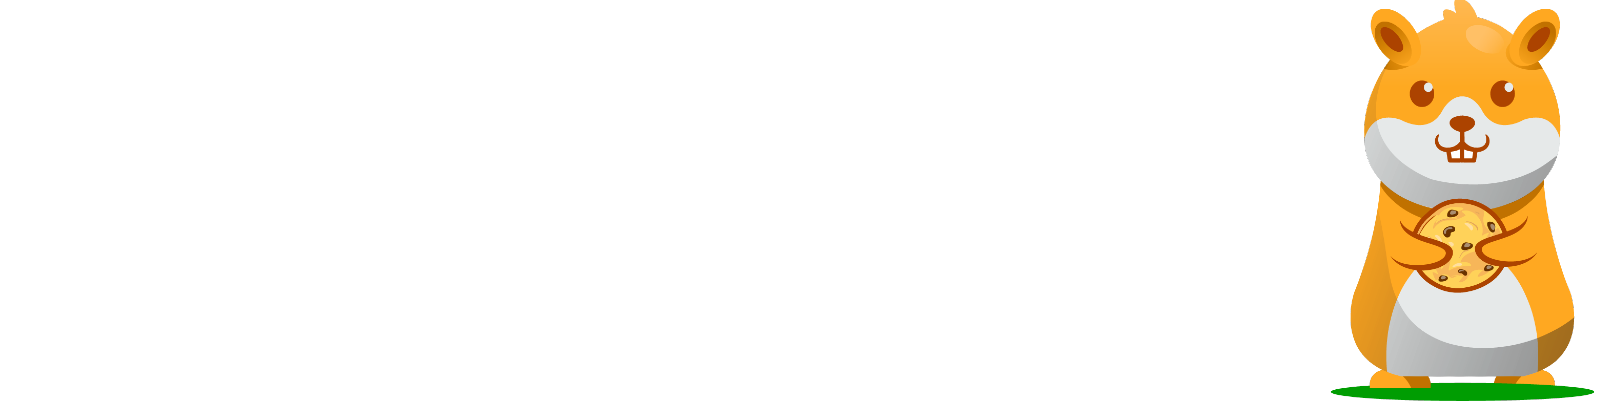 Noodvoedselvoorziening.nl-logo 10723